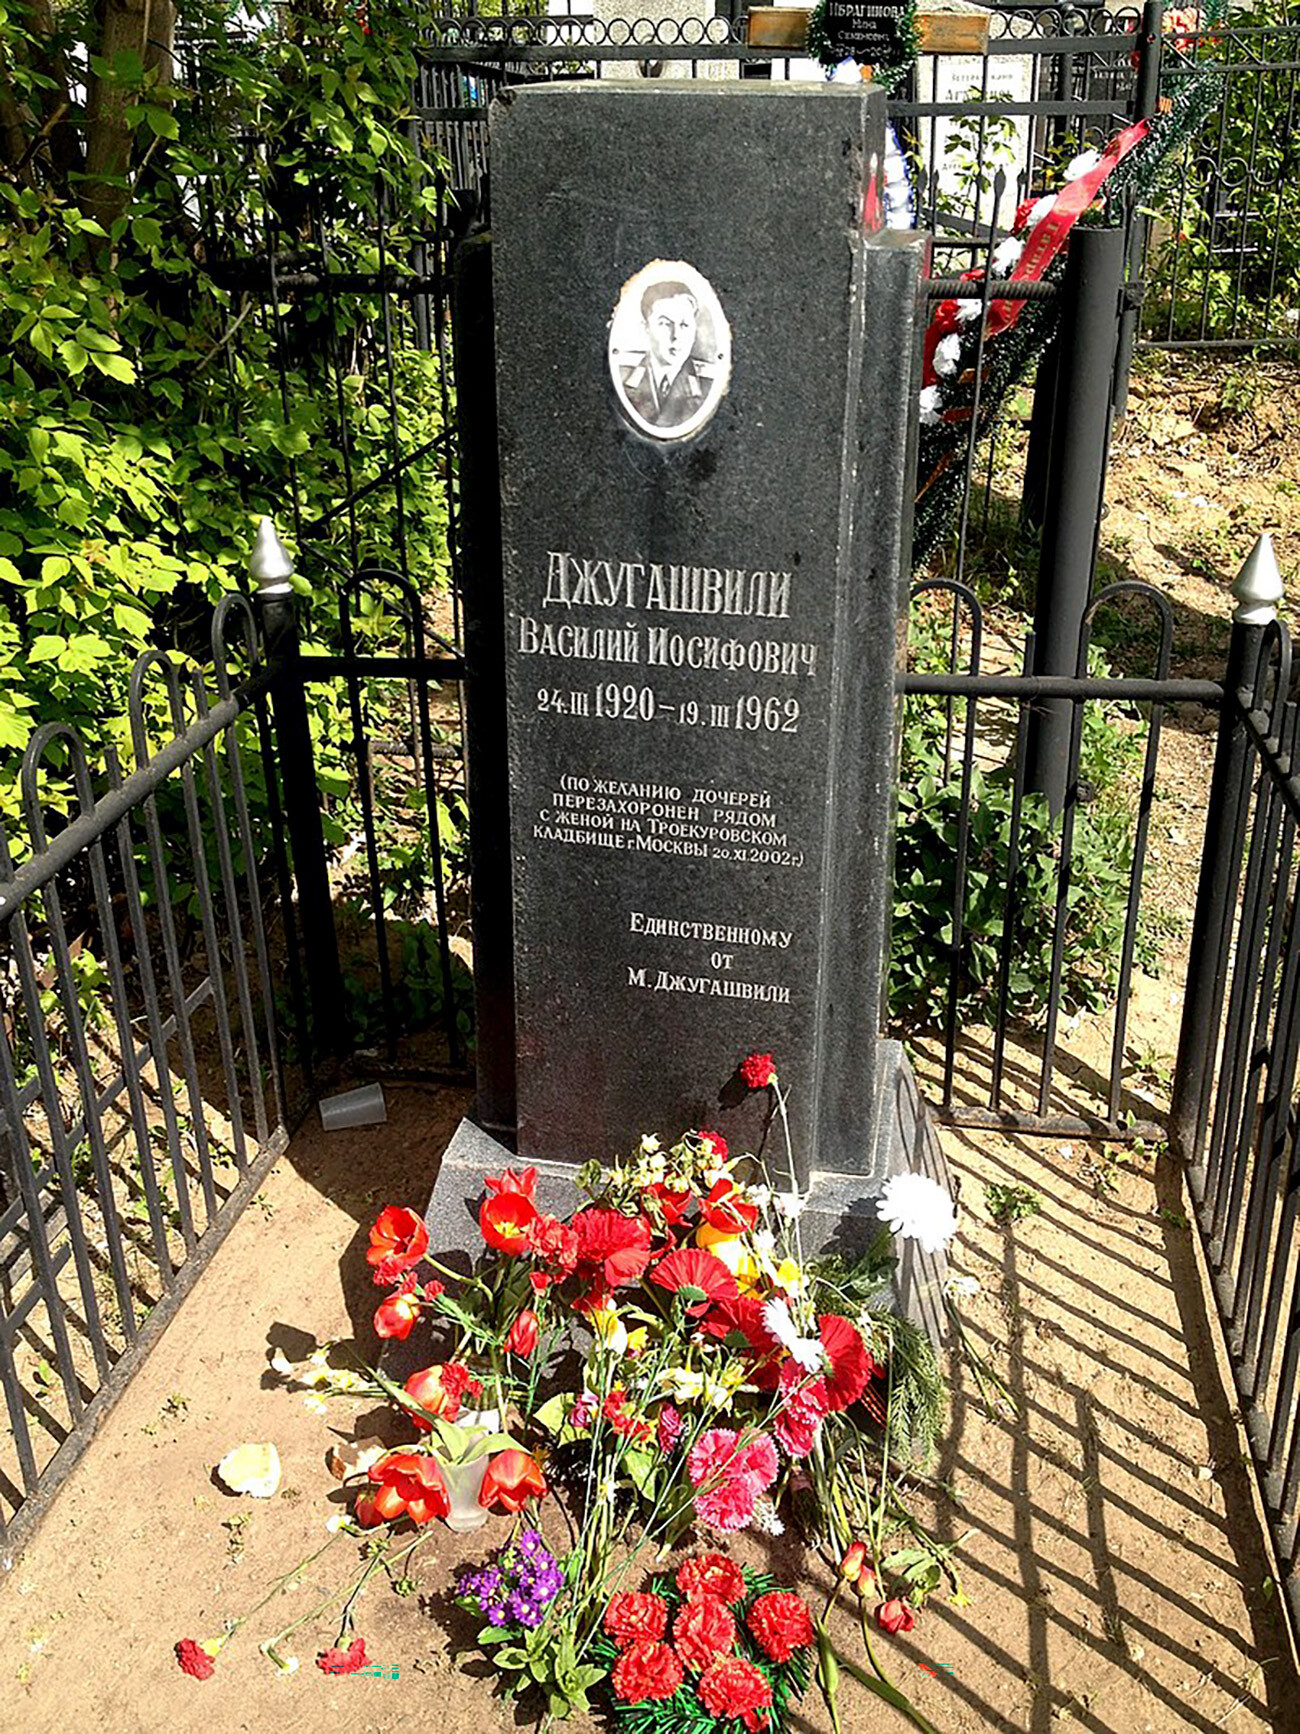 Vasily Stalin's cenotaph at a graveyard in Kazan